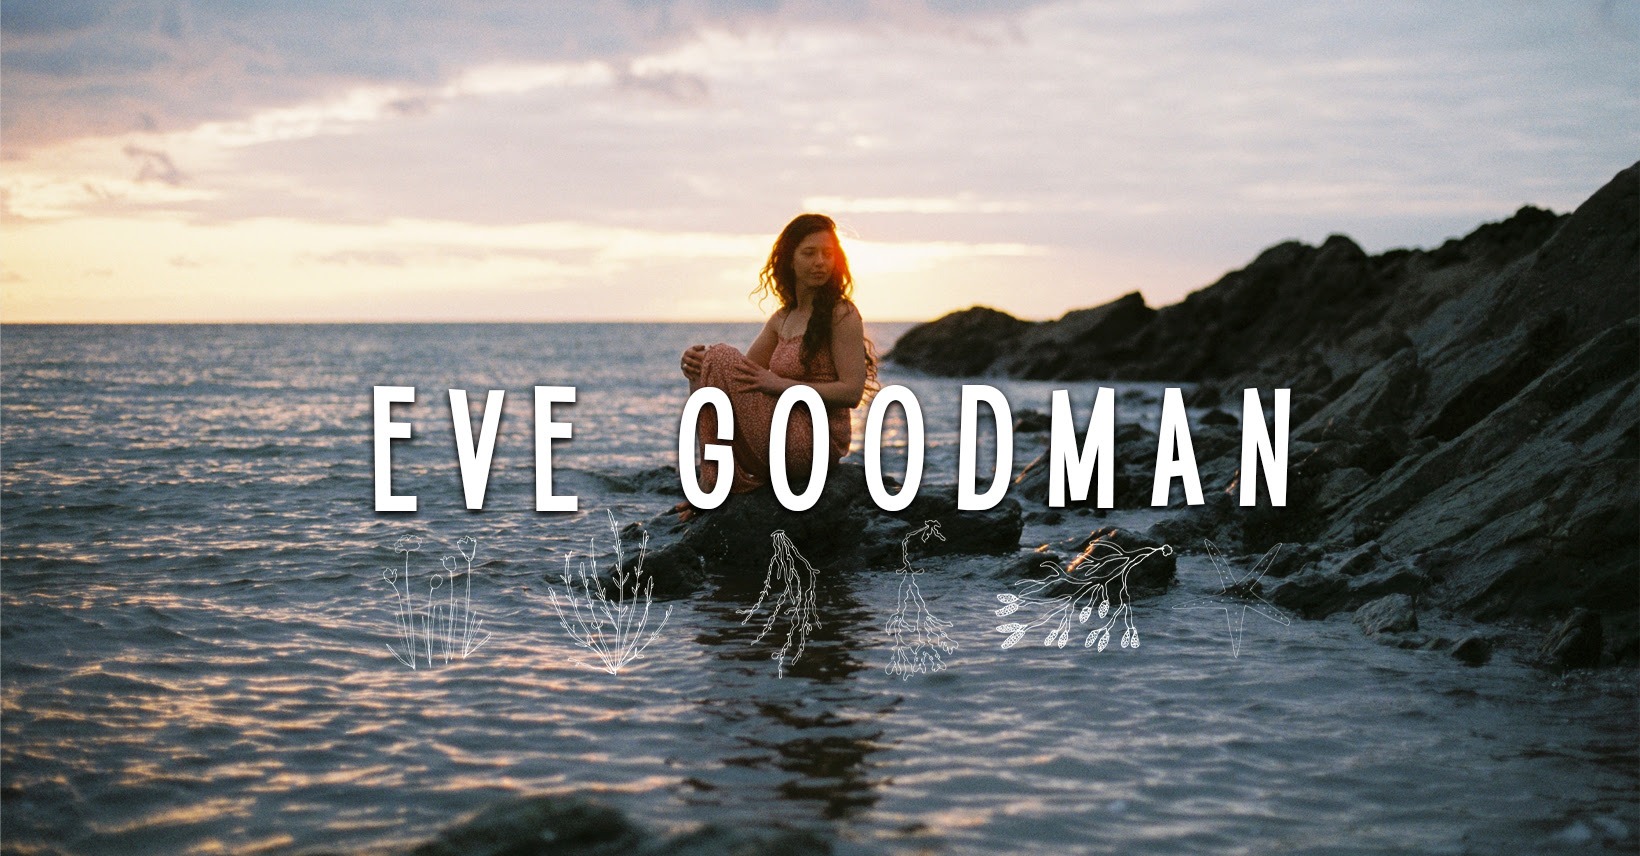 EXCLUSIVE: Eve Goodman ‘Wave upon Wave’ Video Premiere